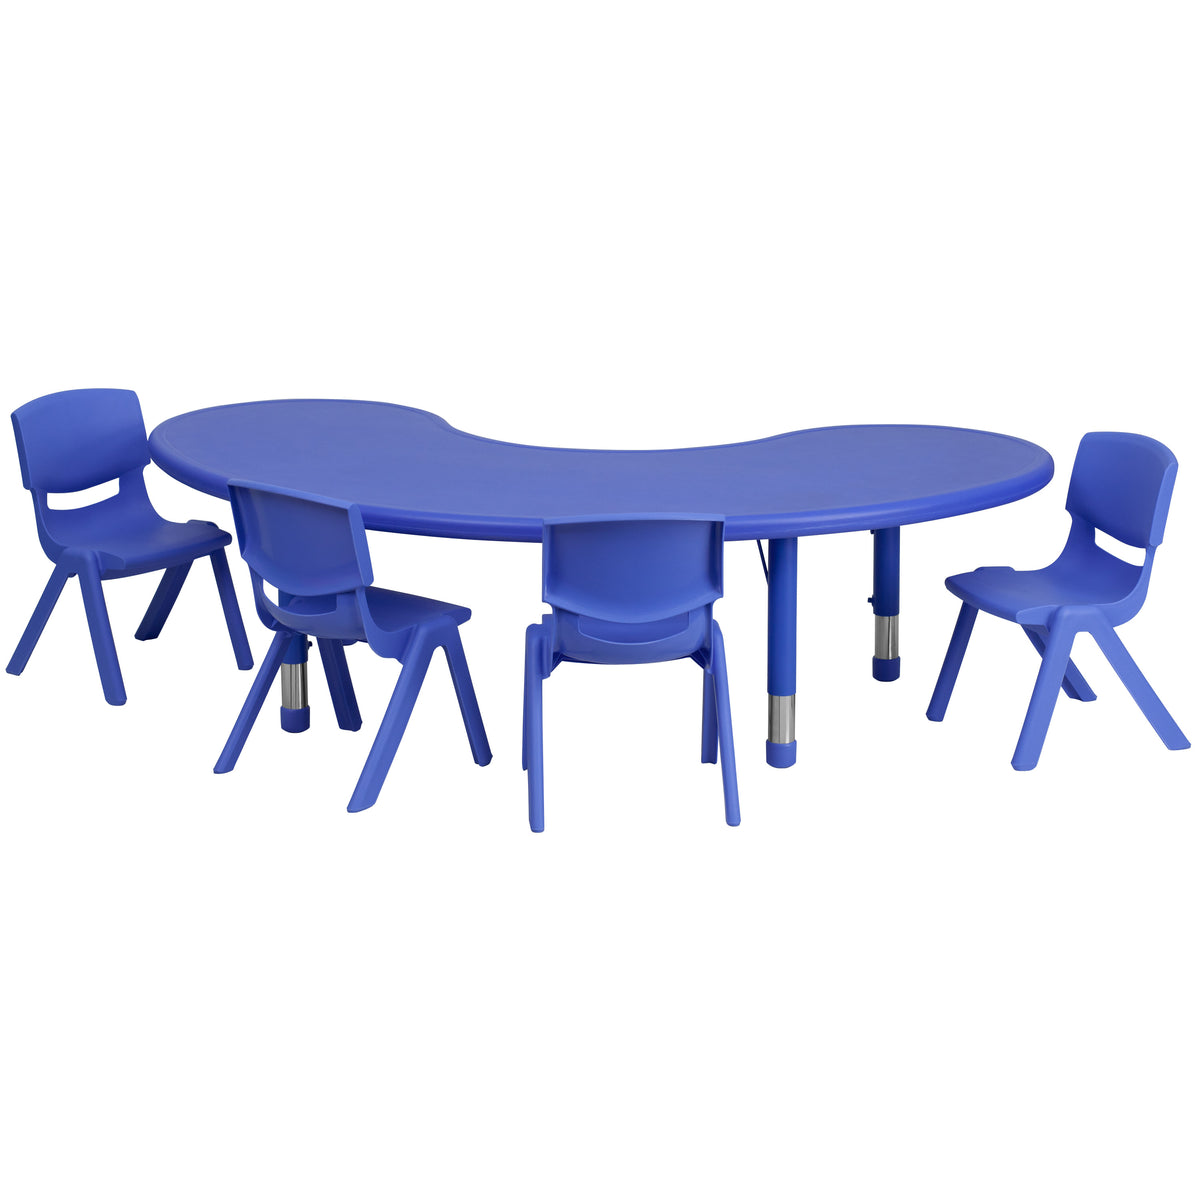 Blue |#| 35inchW x 65inchL Half-Moon Blue Plastic Adjustable Activity Table Set - 4 Chairs